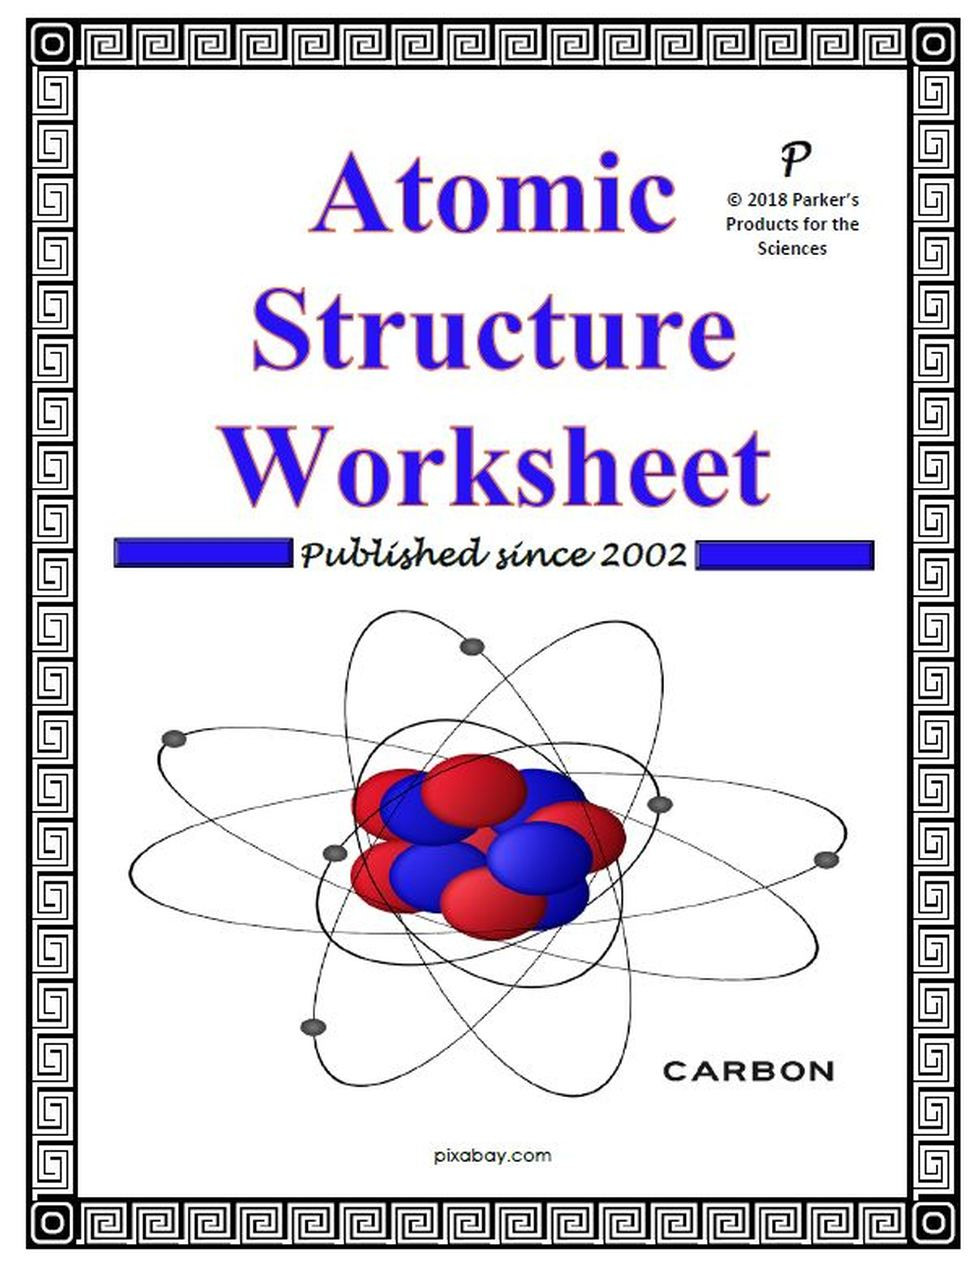 Atomic Structure Worksheet Answer Key atomic Structure Worksheet